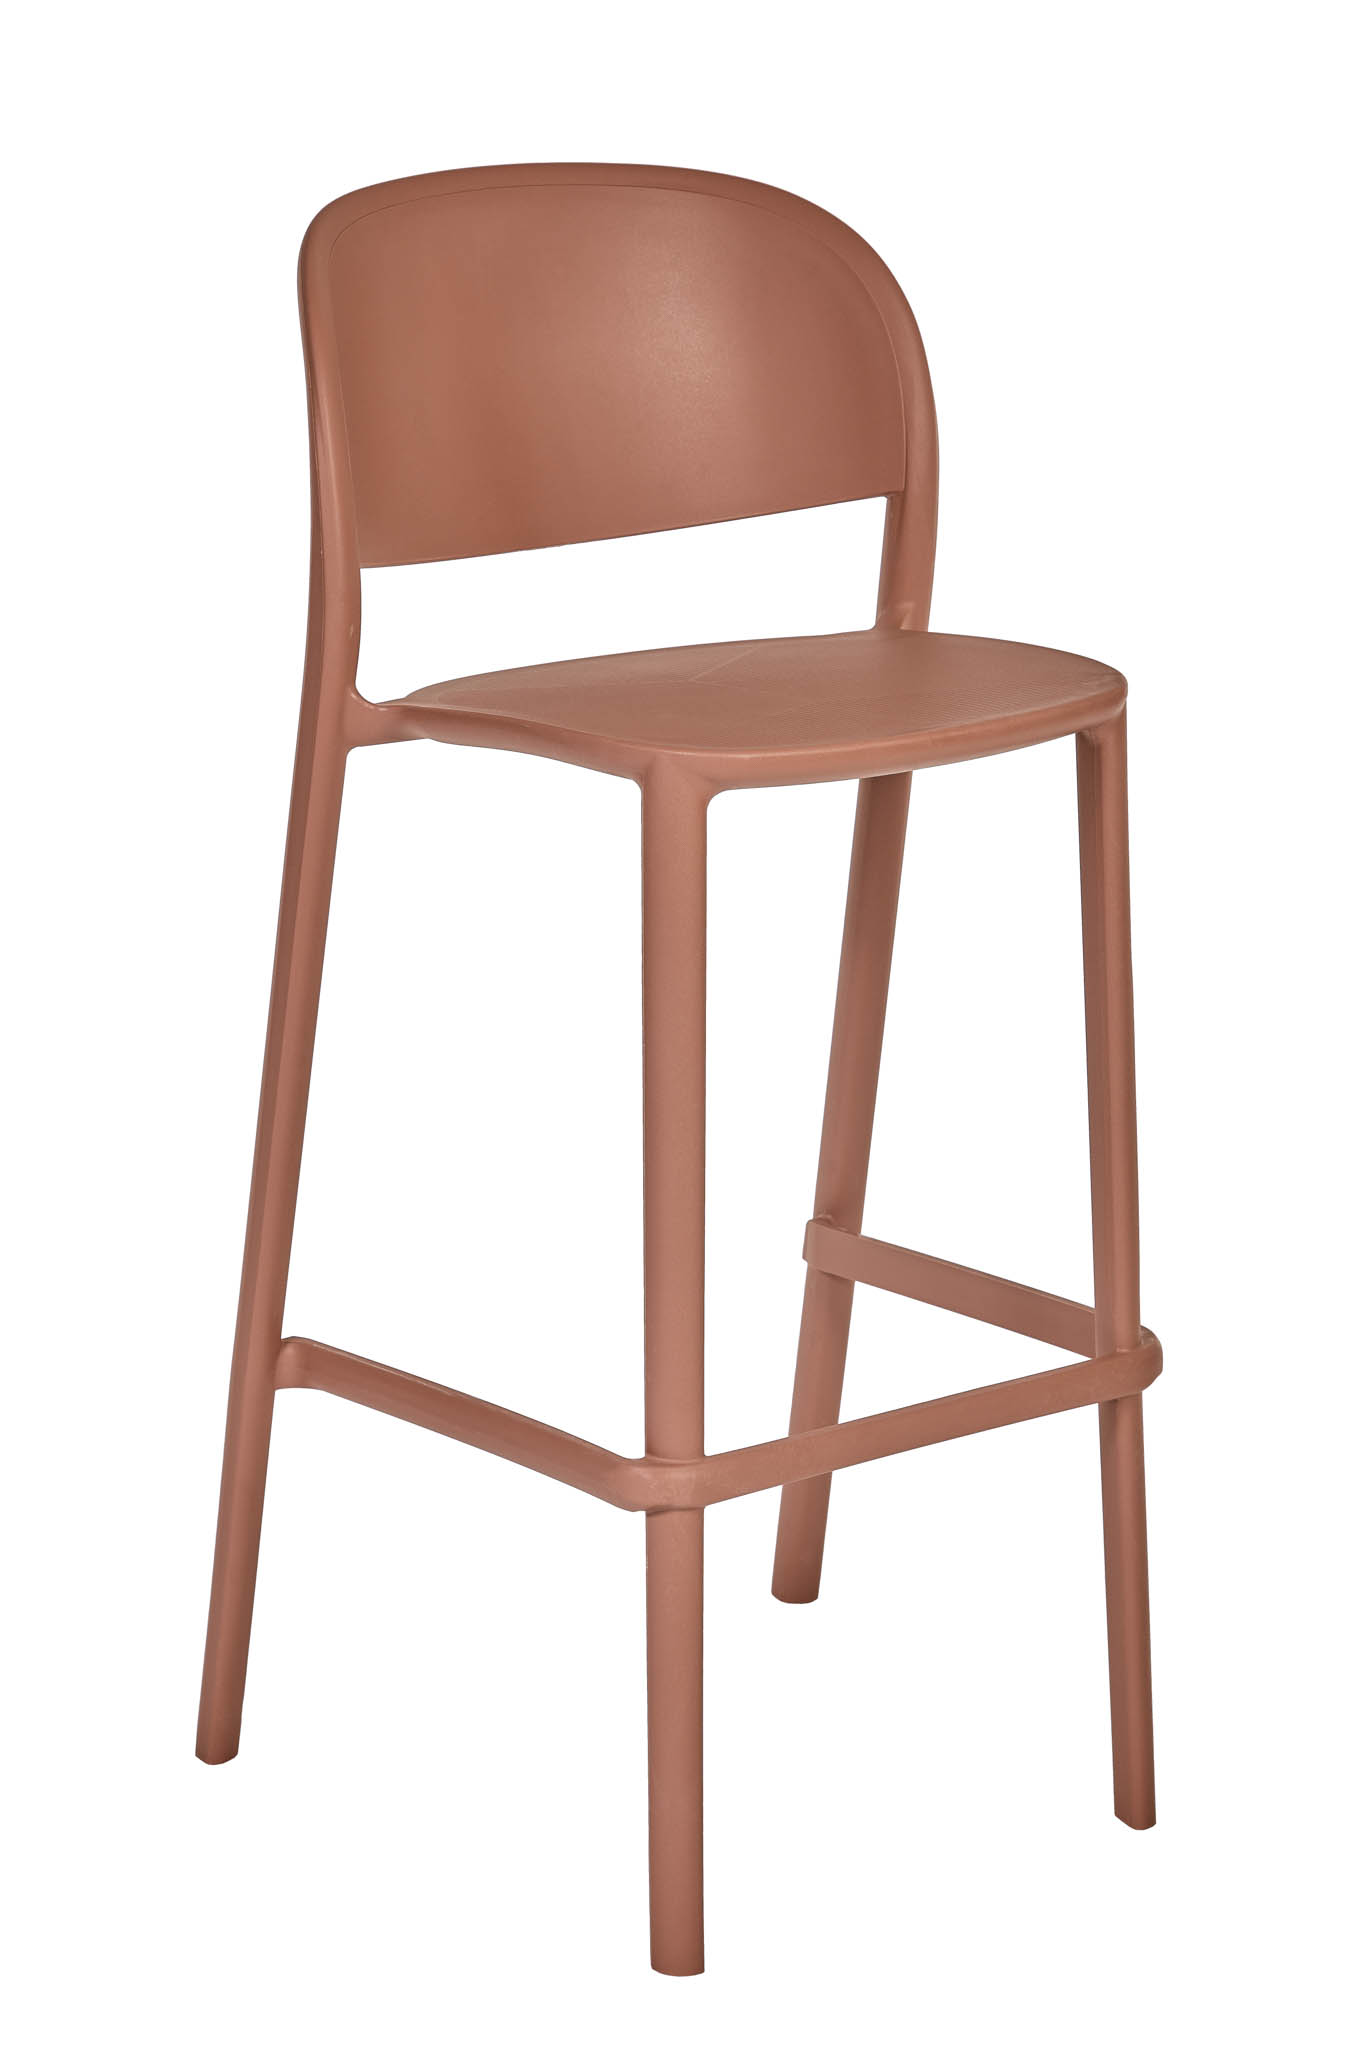 AD hotelska oprema Barska stolica 01 - Terracota boje slika proizvoda